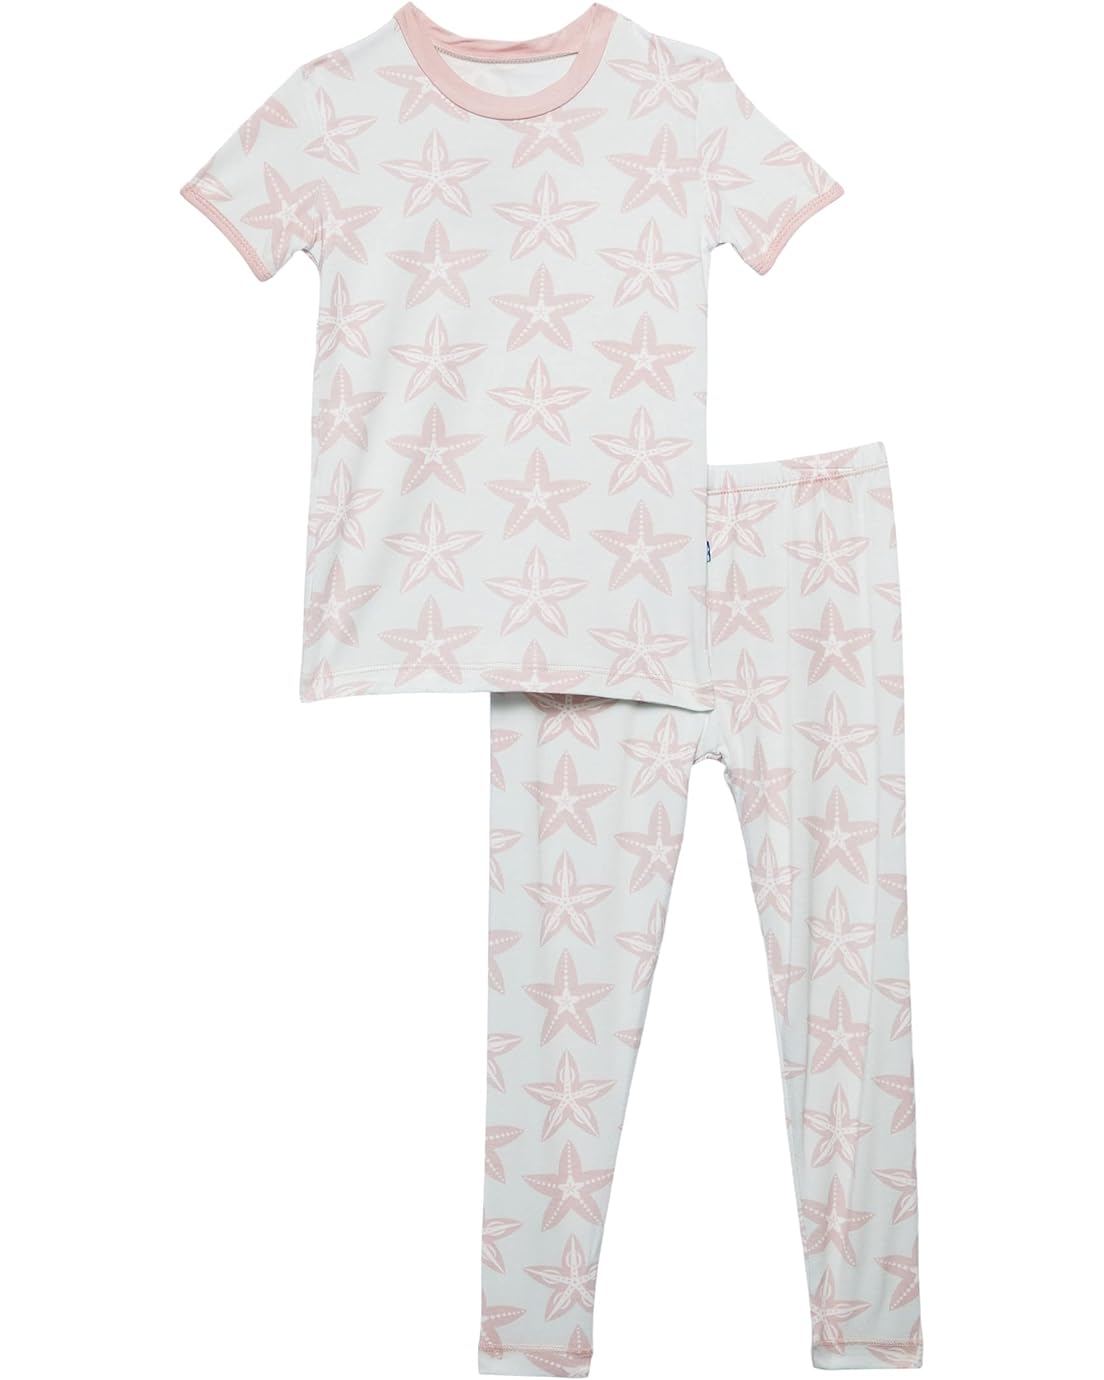  Kickee Pants Kids Short Sleeve Pajama Set (Toddler/Little Kids)